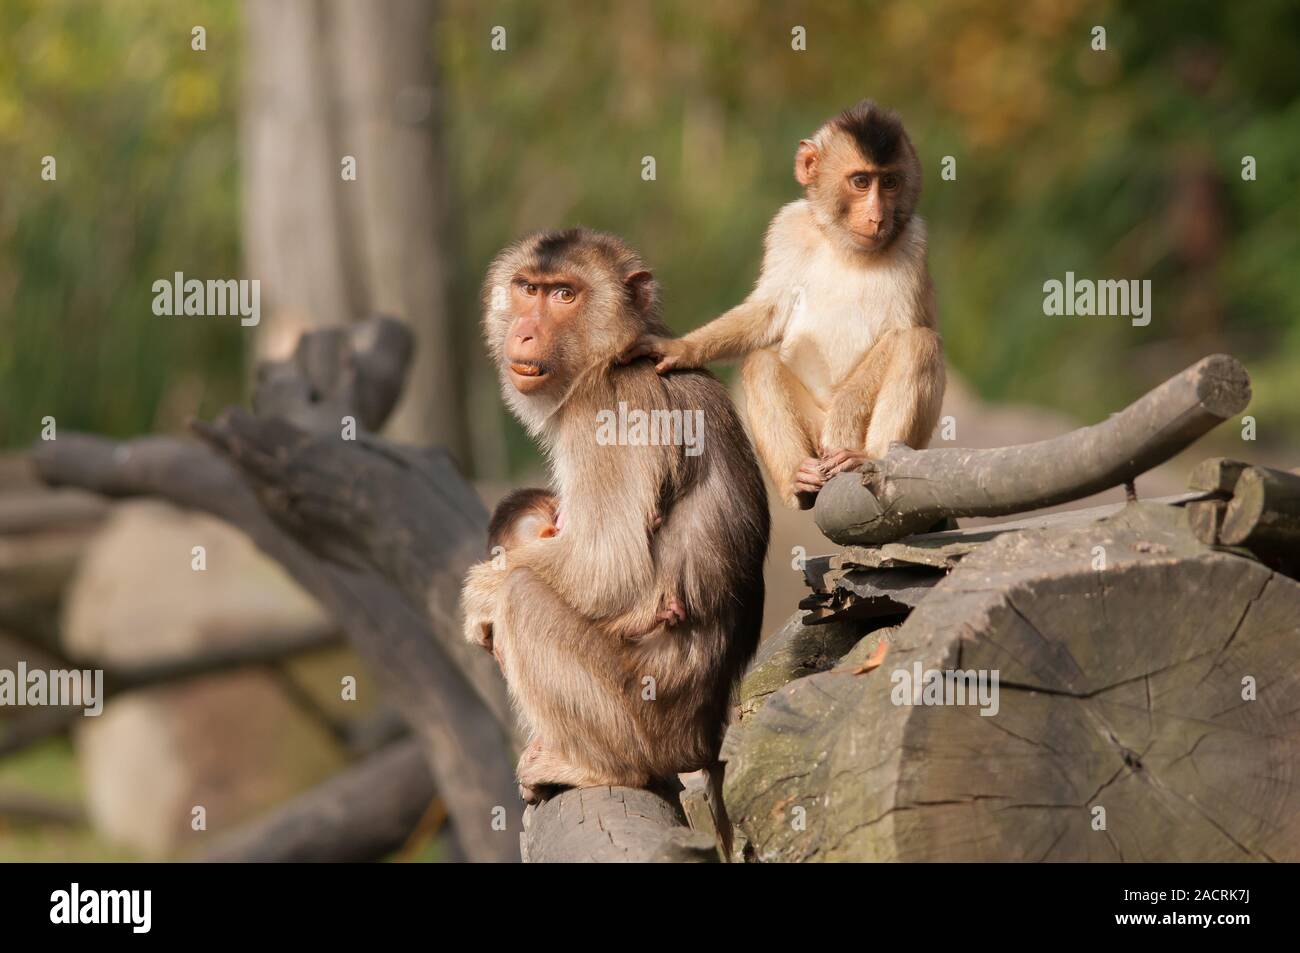 swine monkey Stock Photo